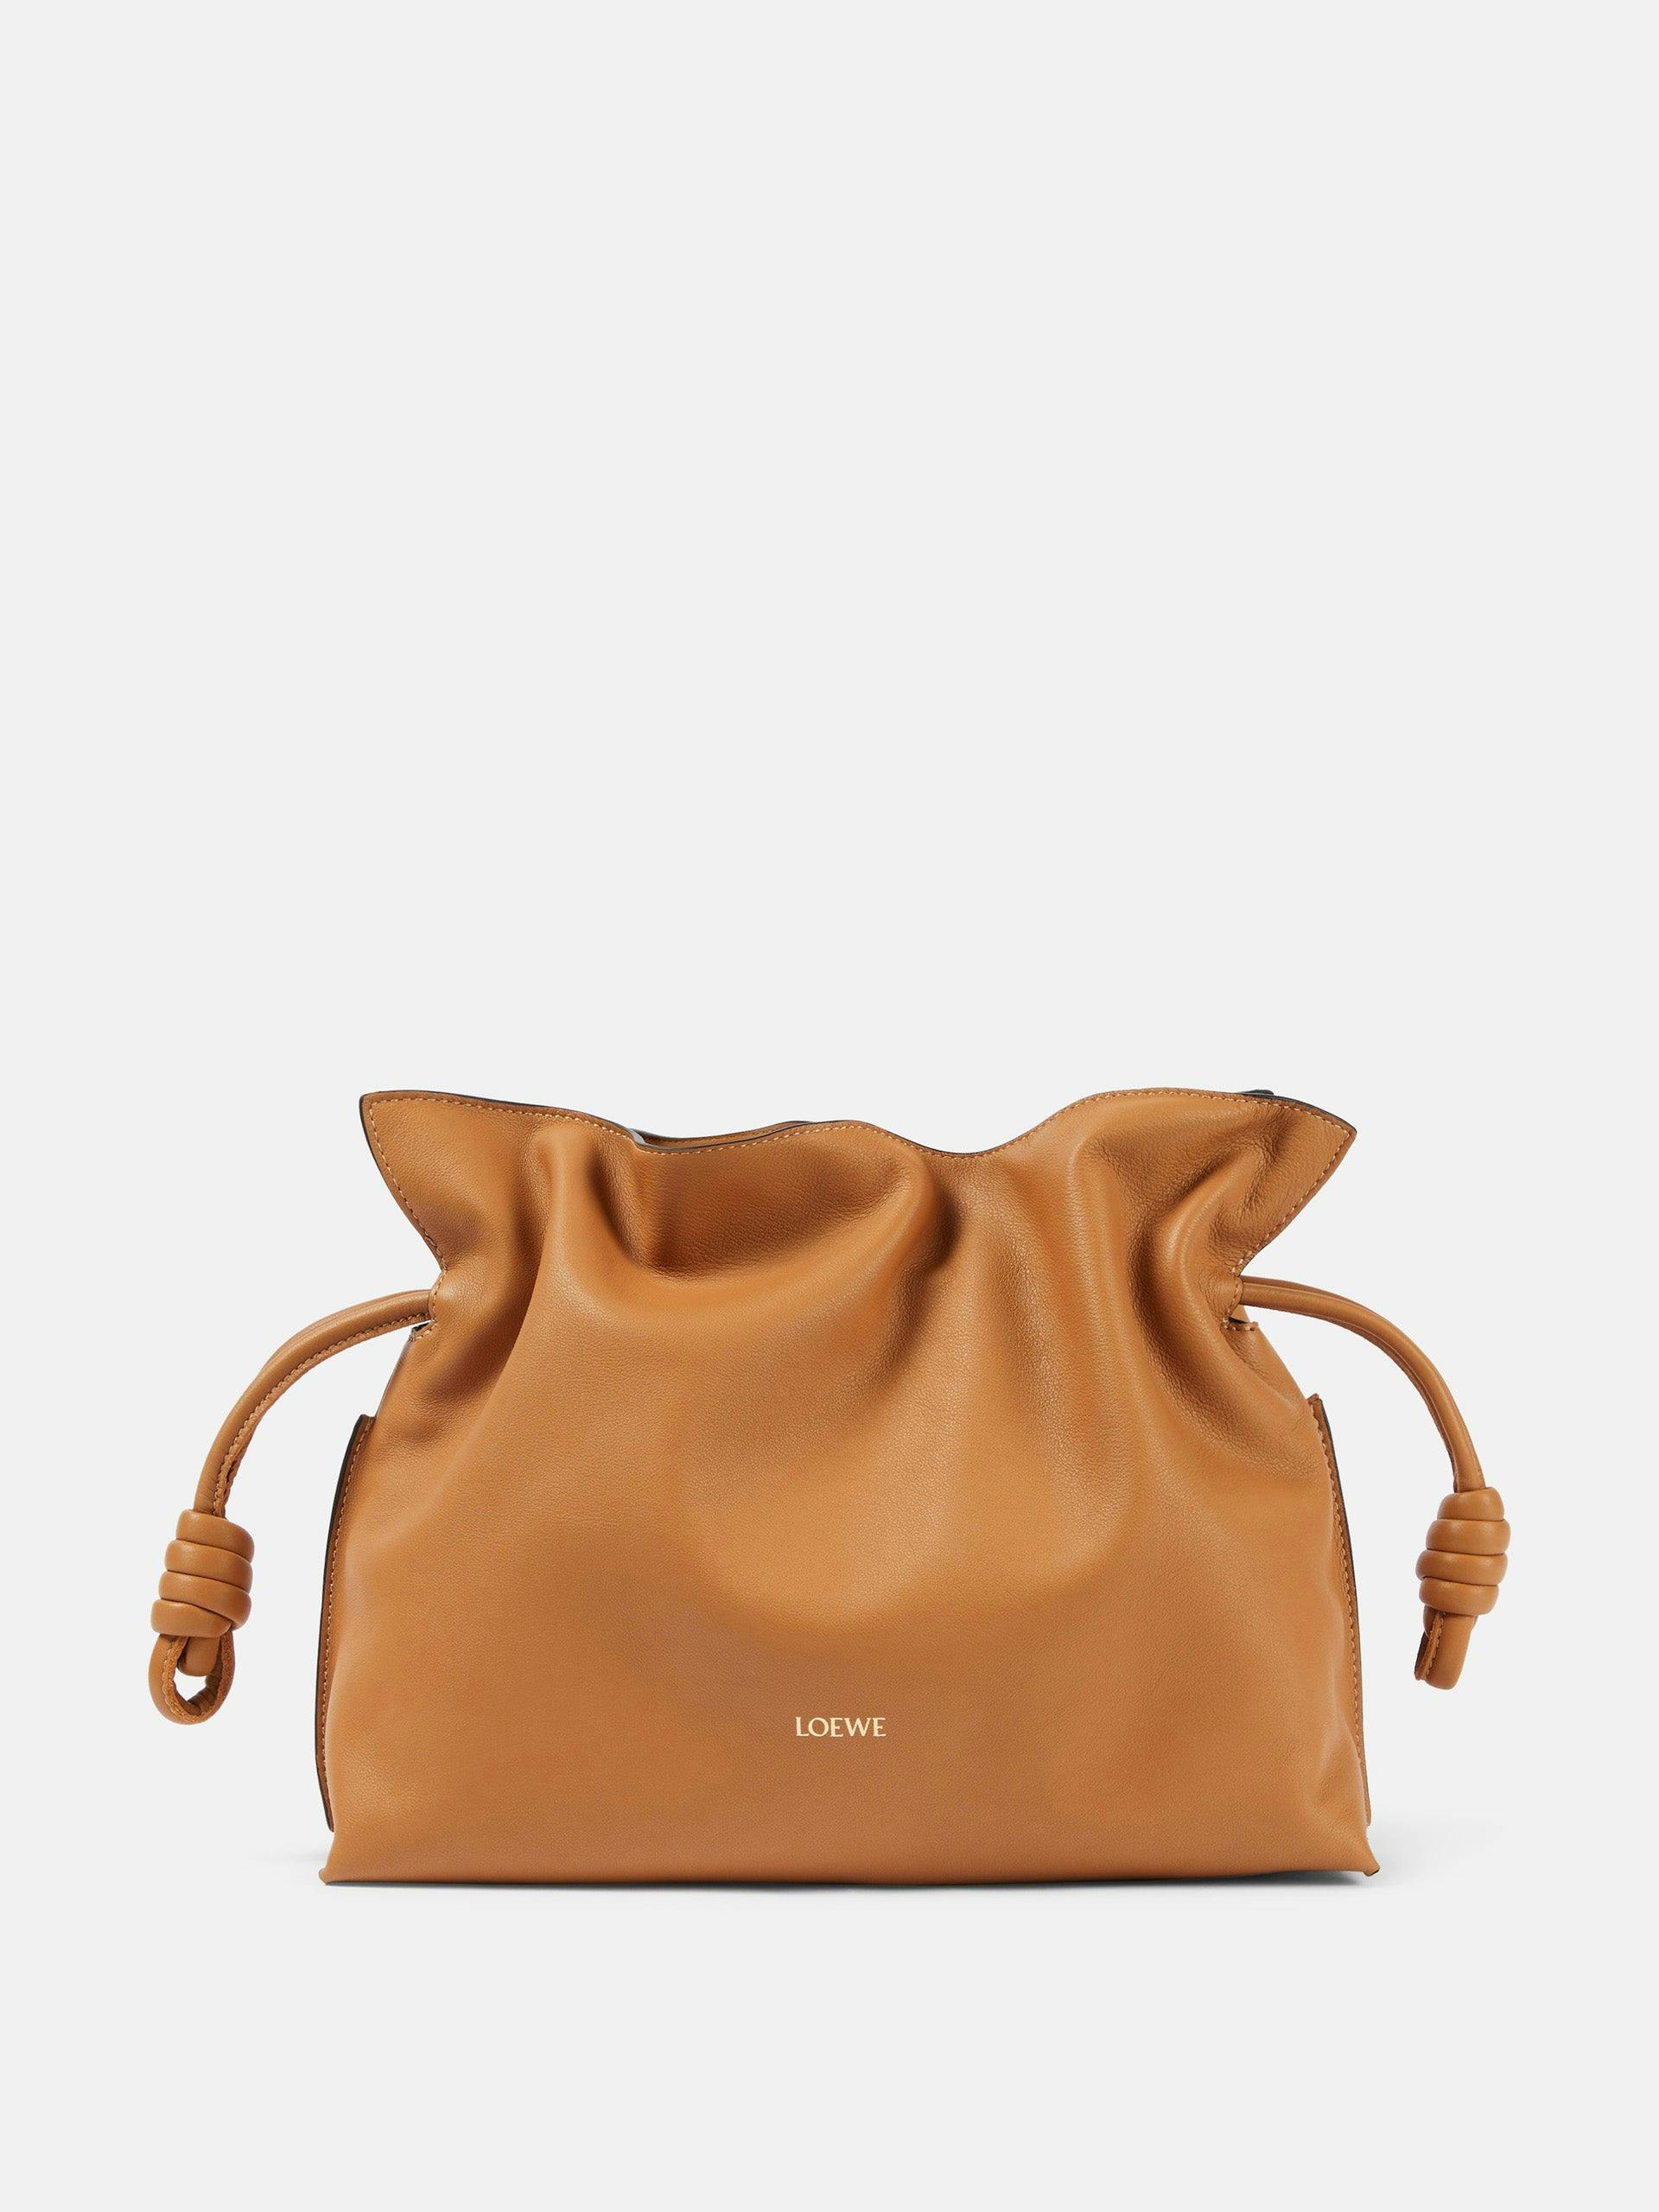 Flamenco leather clutch bag